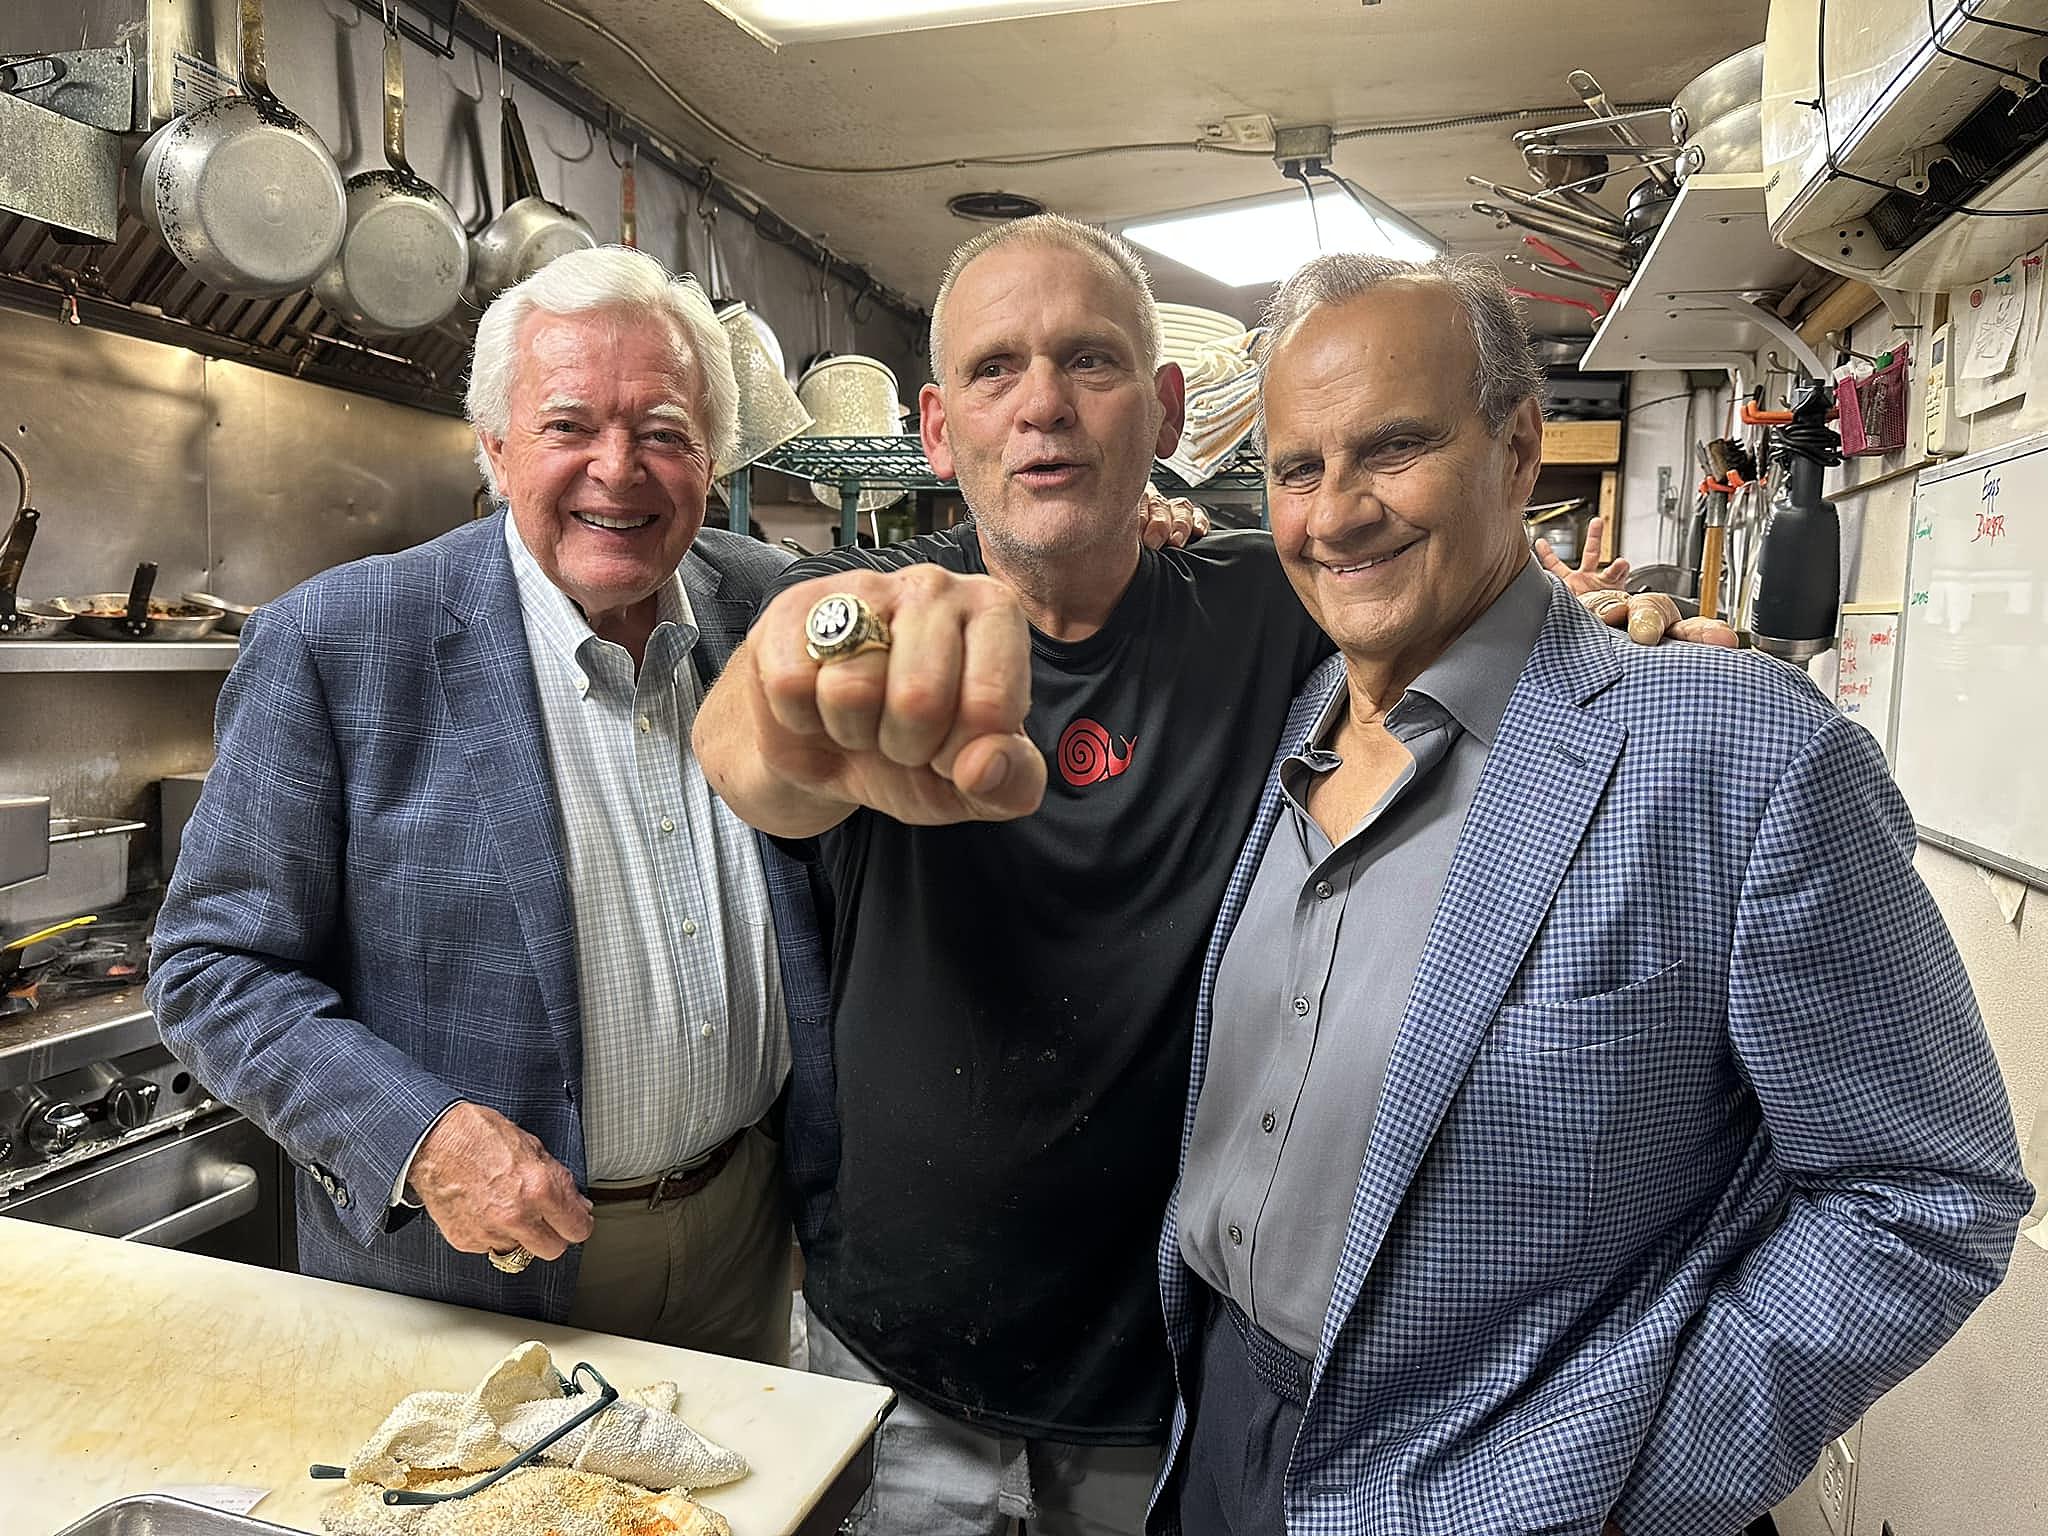 Yankees' Legend Surprises Upstate NY Italian Restaurant Owners